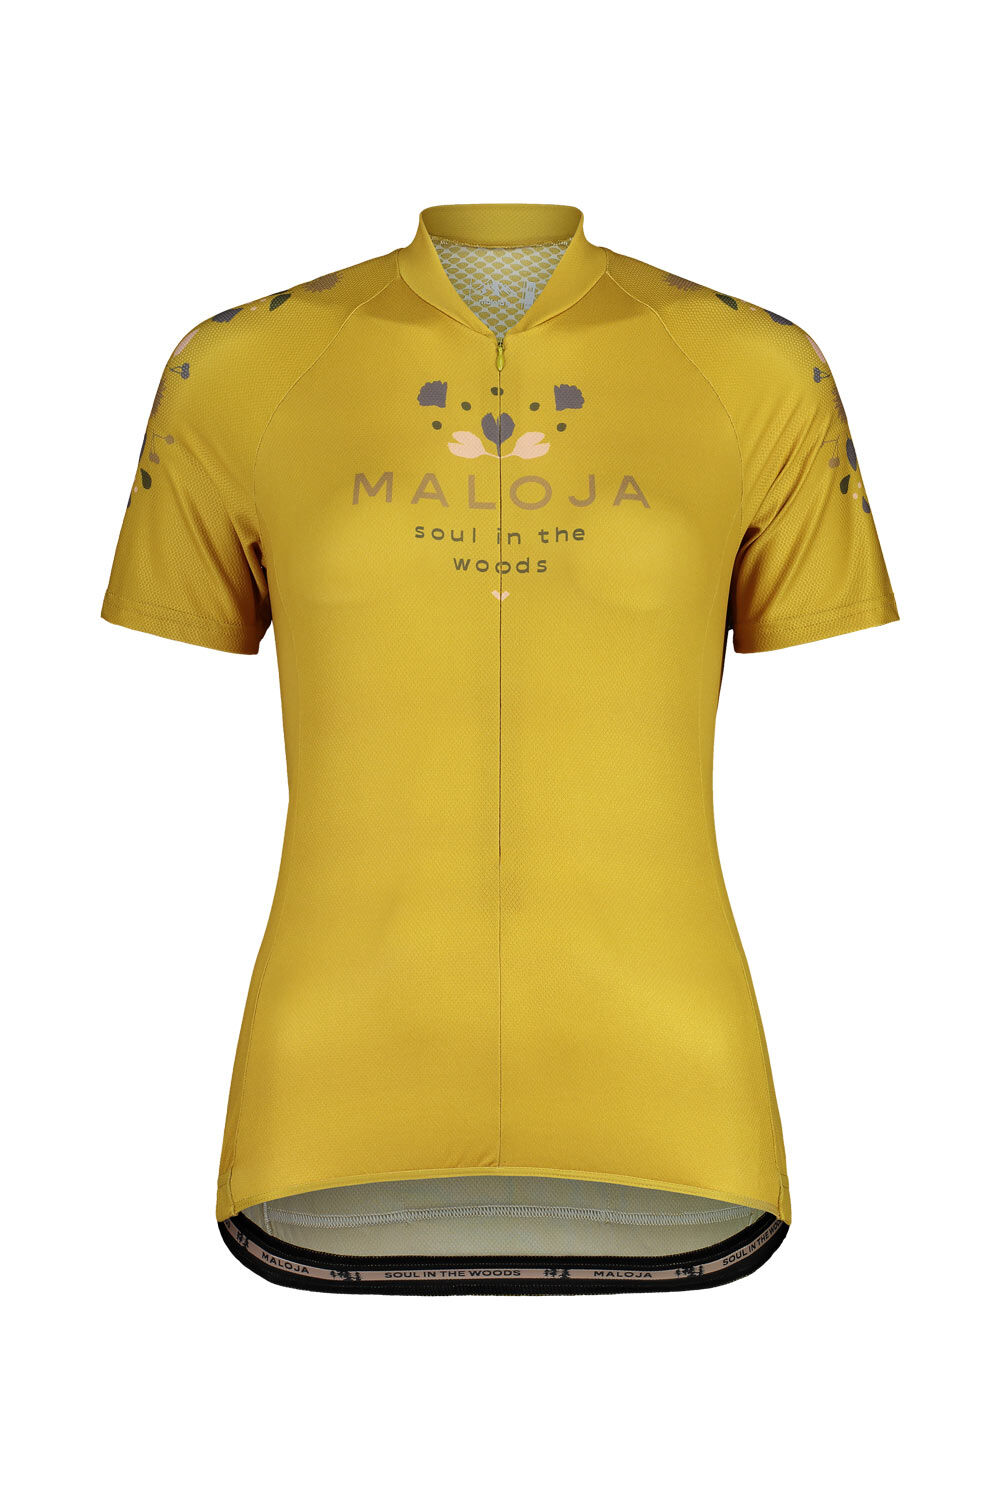 Maloja RubinieM. 1/2 - Maillot ciclismo - Mujer